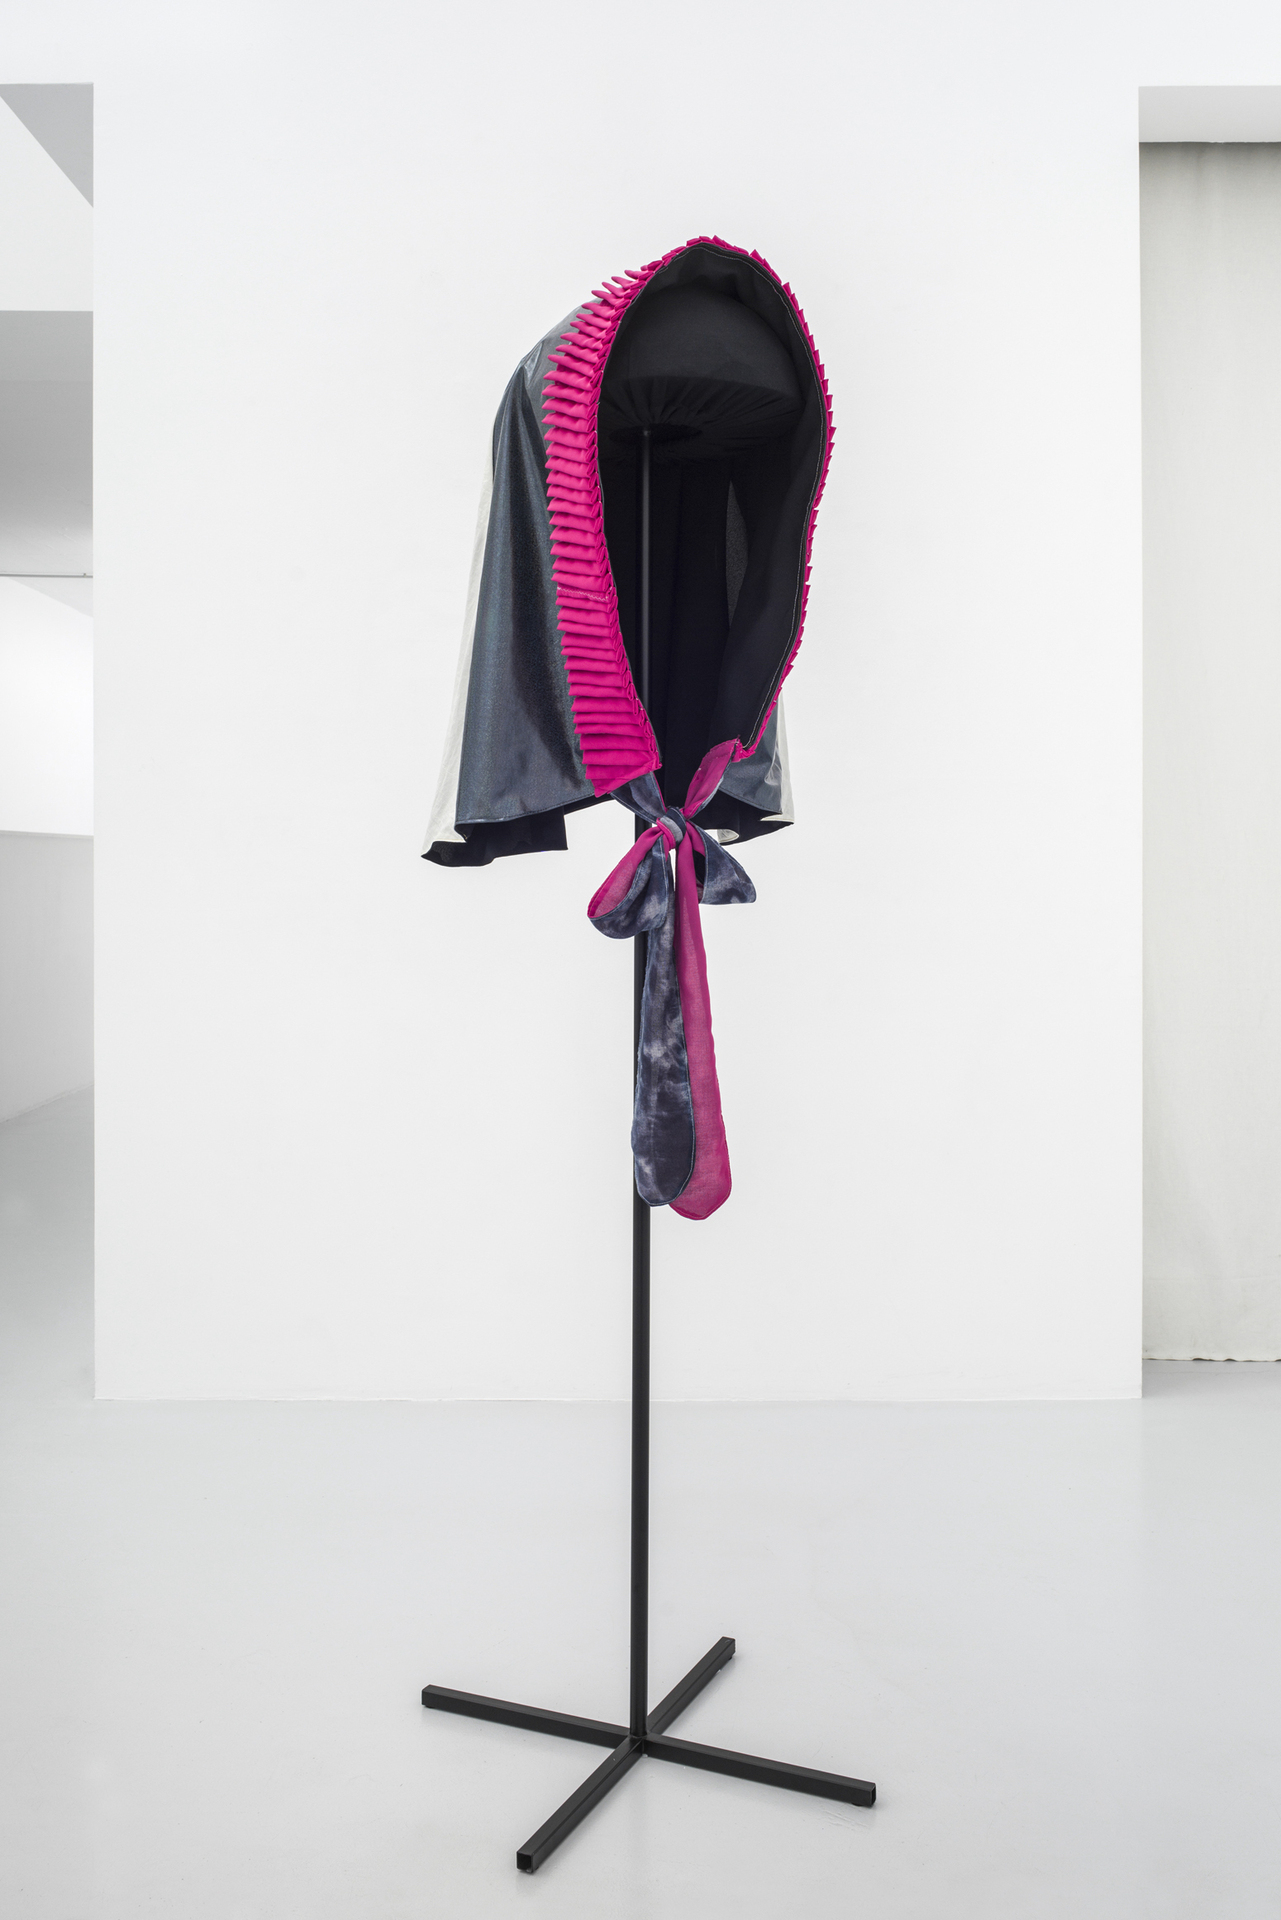 Morgaine Schäfer, Diakonisse Hilde (Henriettenstift Hannover), 2021, handmade fabric hood, powder coated steel, styrofoam, ca. 185 x 55 x 55 cm.